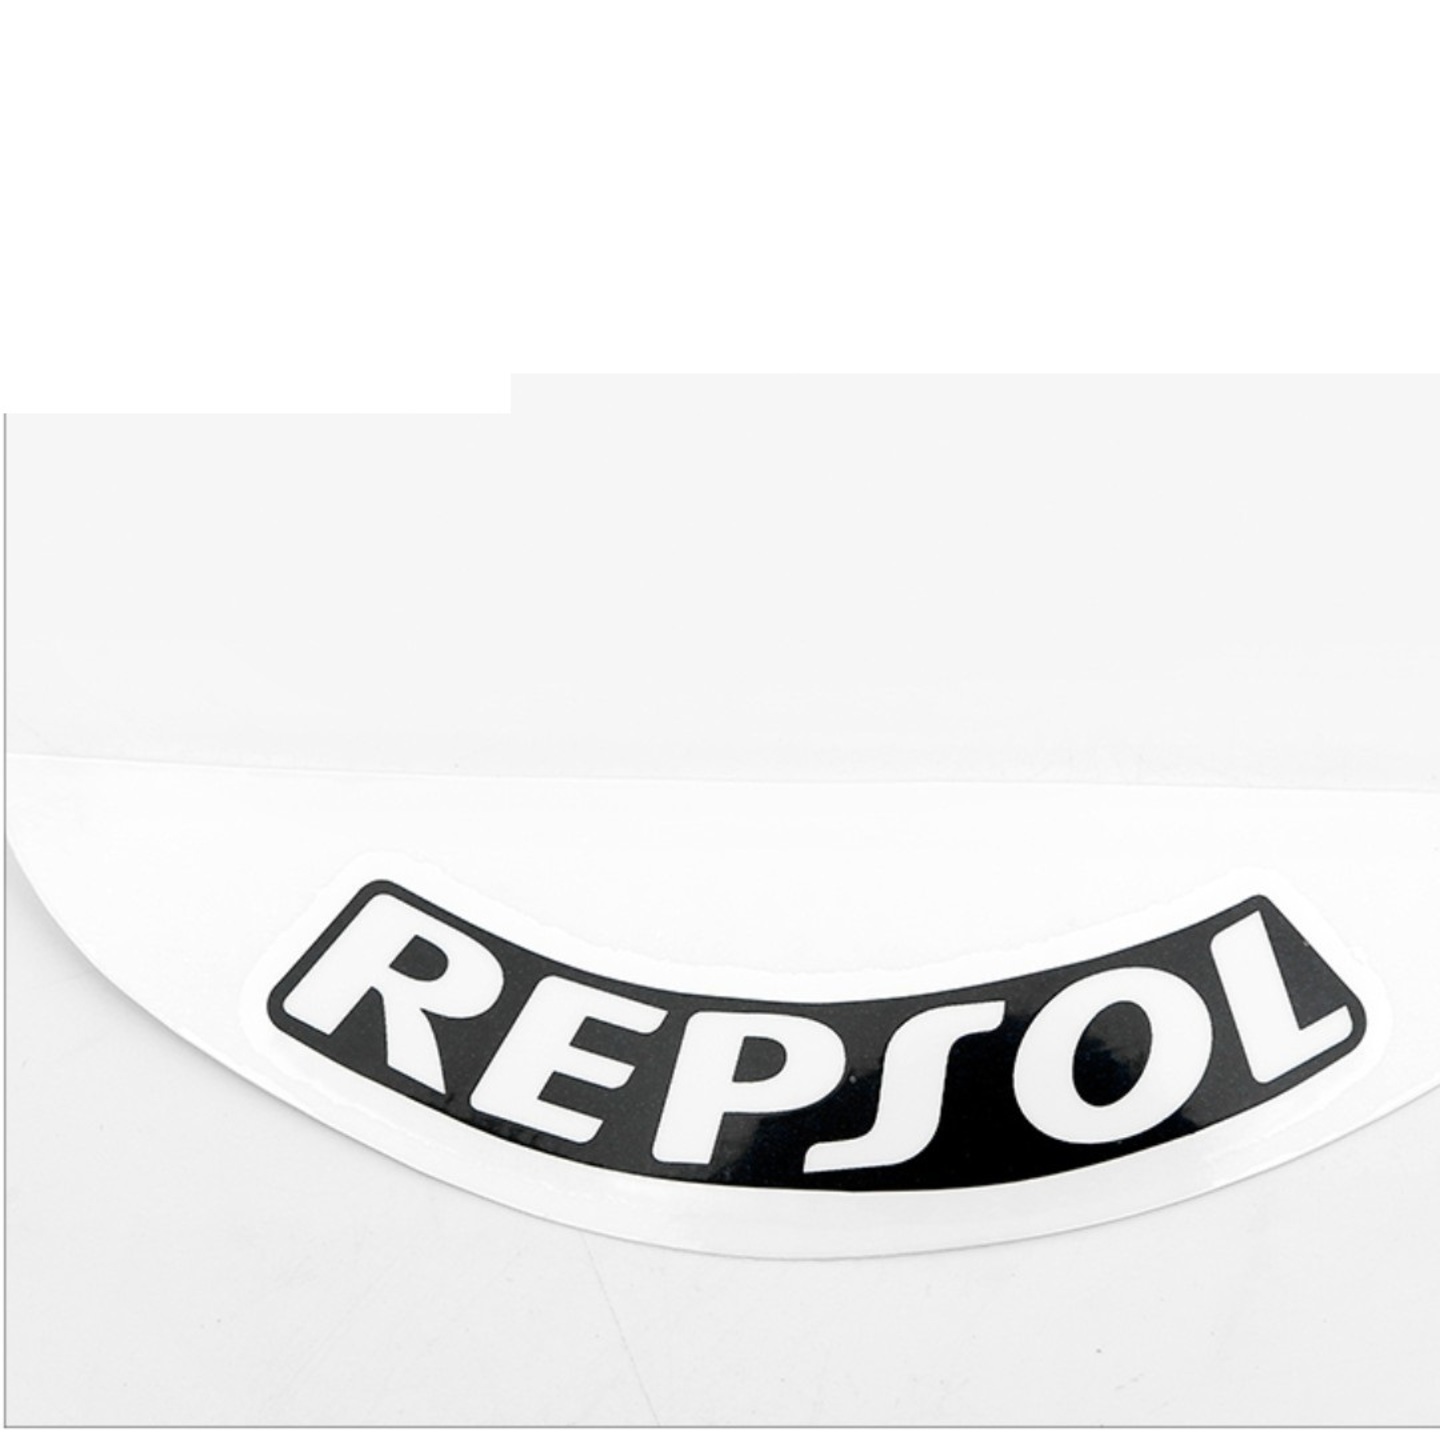 Honda CB190R Repsol front fender decal